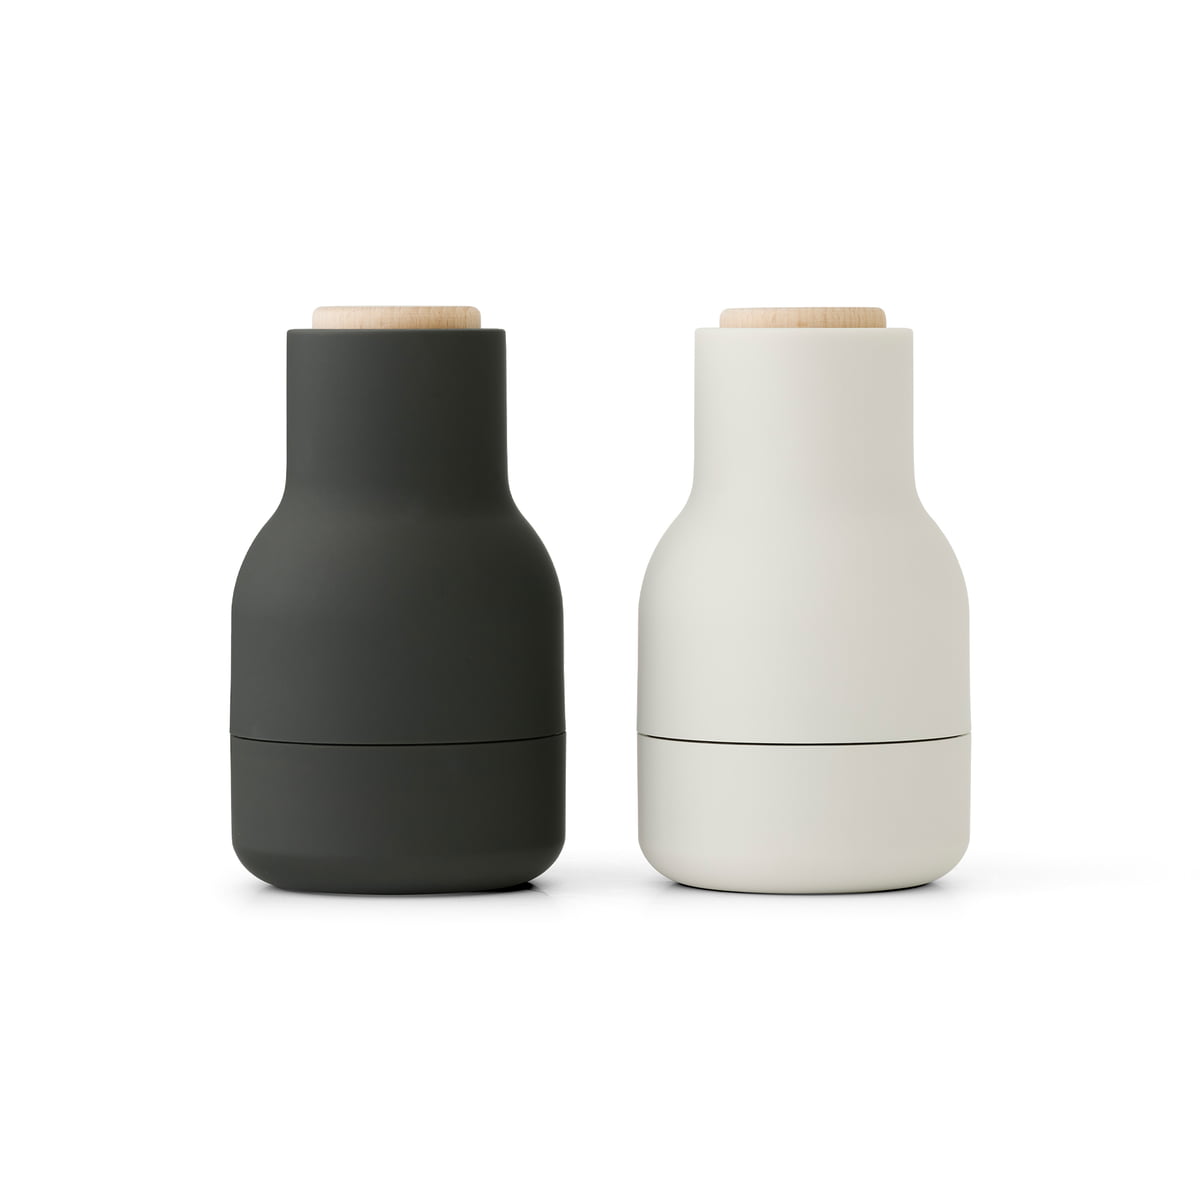 Bottle Grinders, Small, Set of 2 by Audo Copenhagen, Carbon